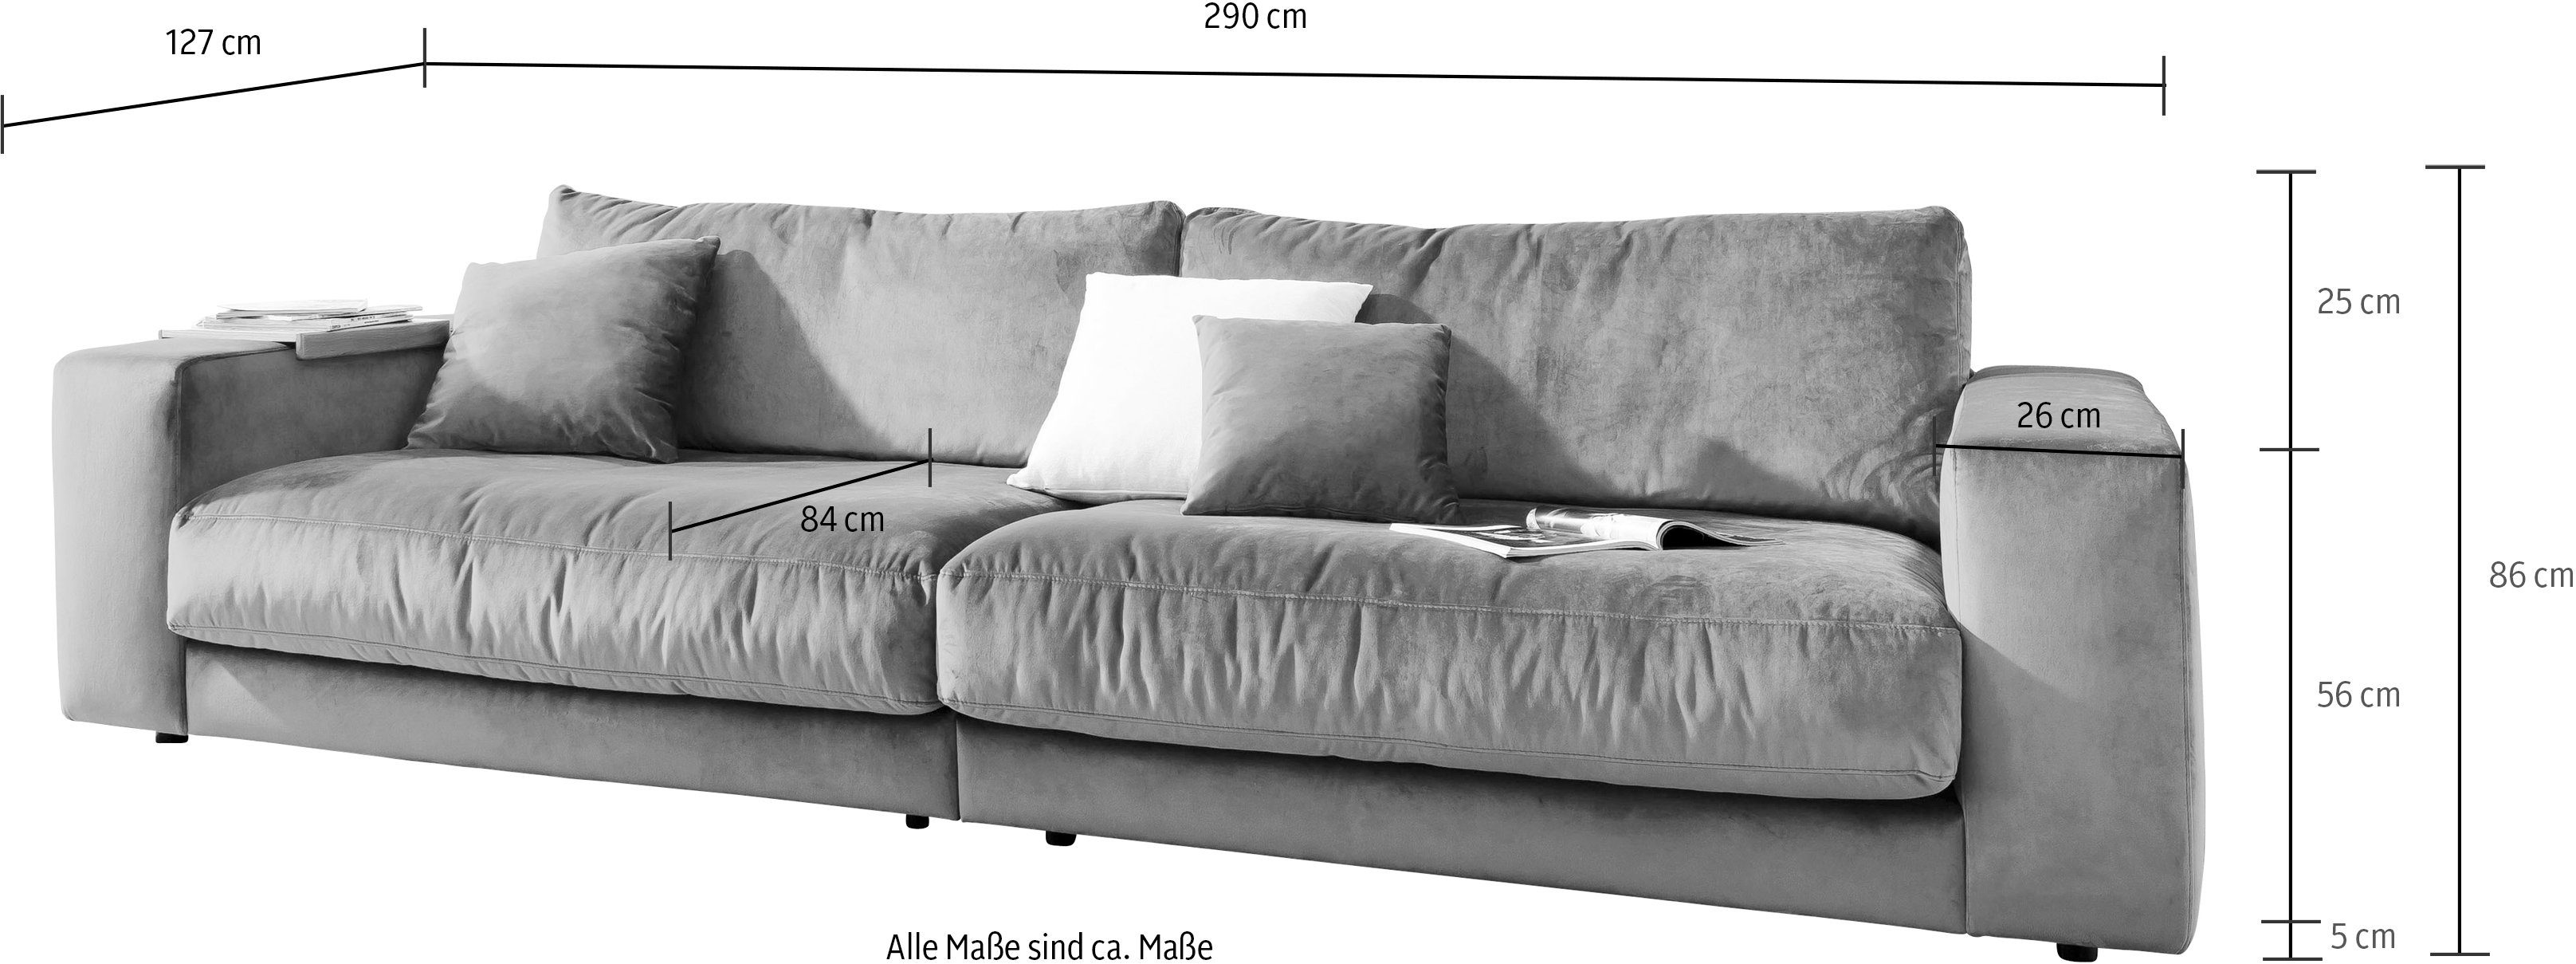 3C Candy Big-Sofa Enisa II, incl. care Flatterkissen, Wahlweise Flecken-Schutz-Bezug Easy mit 1